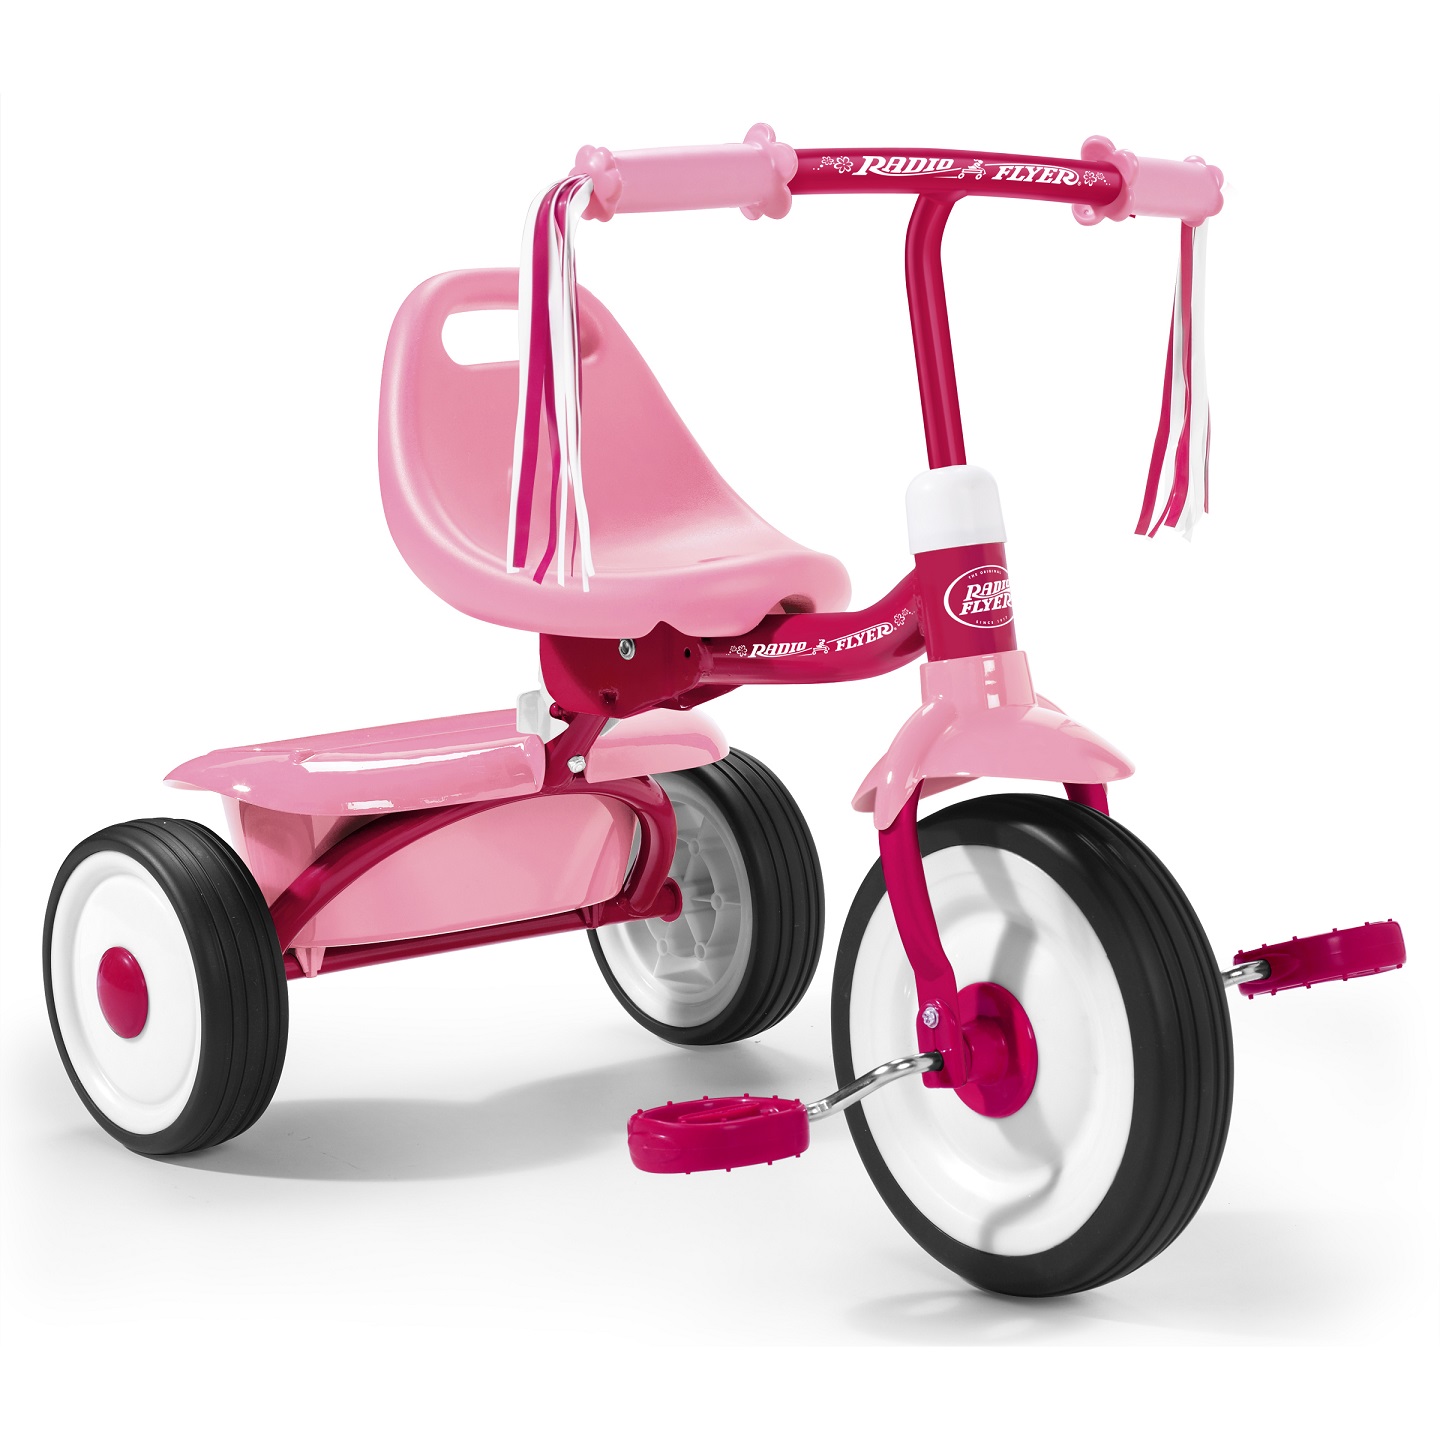 Tricicleta pliabila radio flyer fold 2 go pink, 1-3 ani buy4baby.ro imagine noua